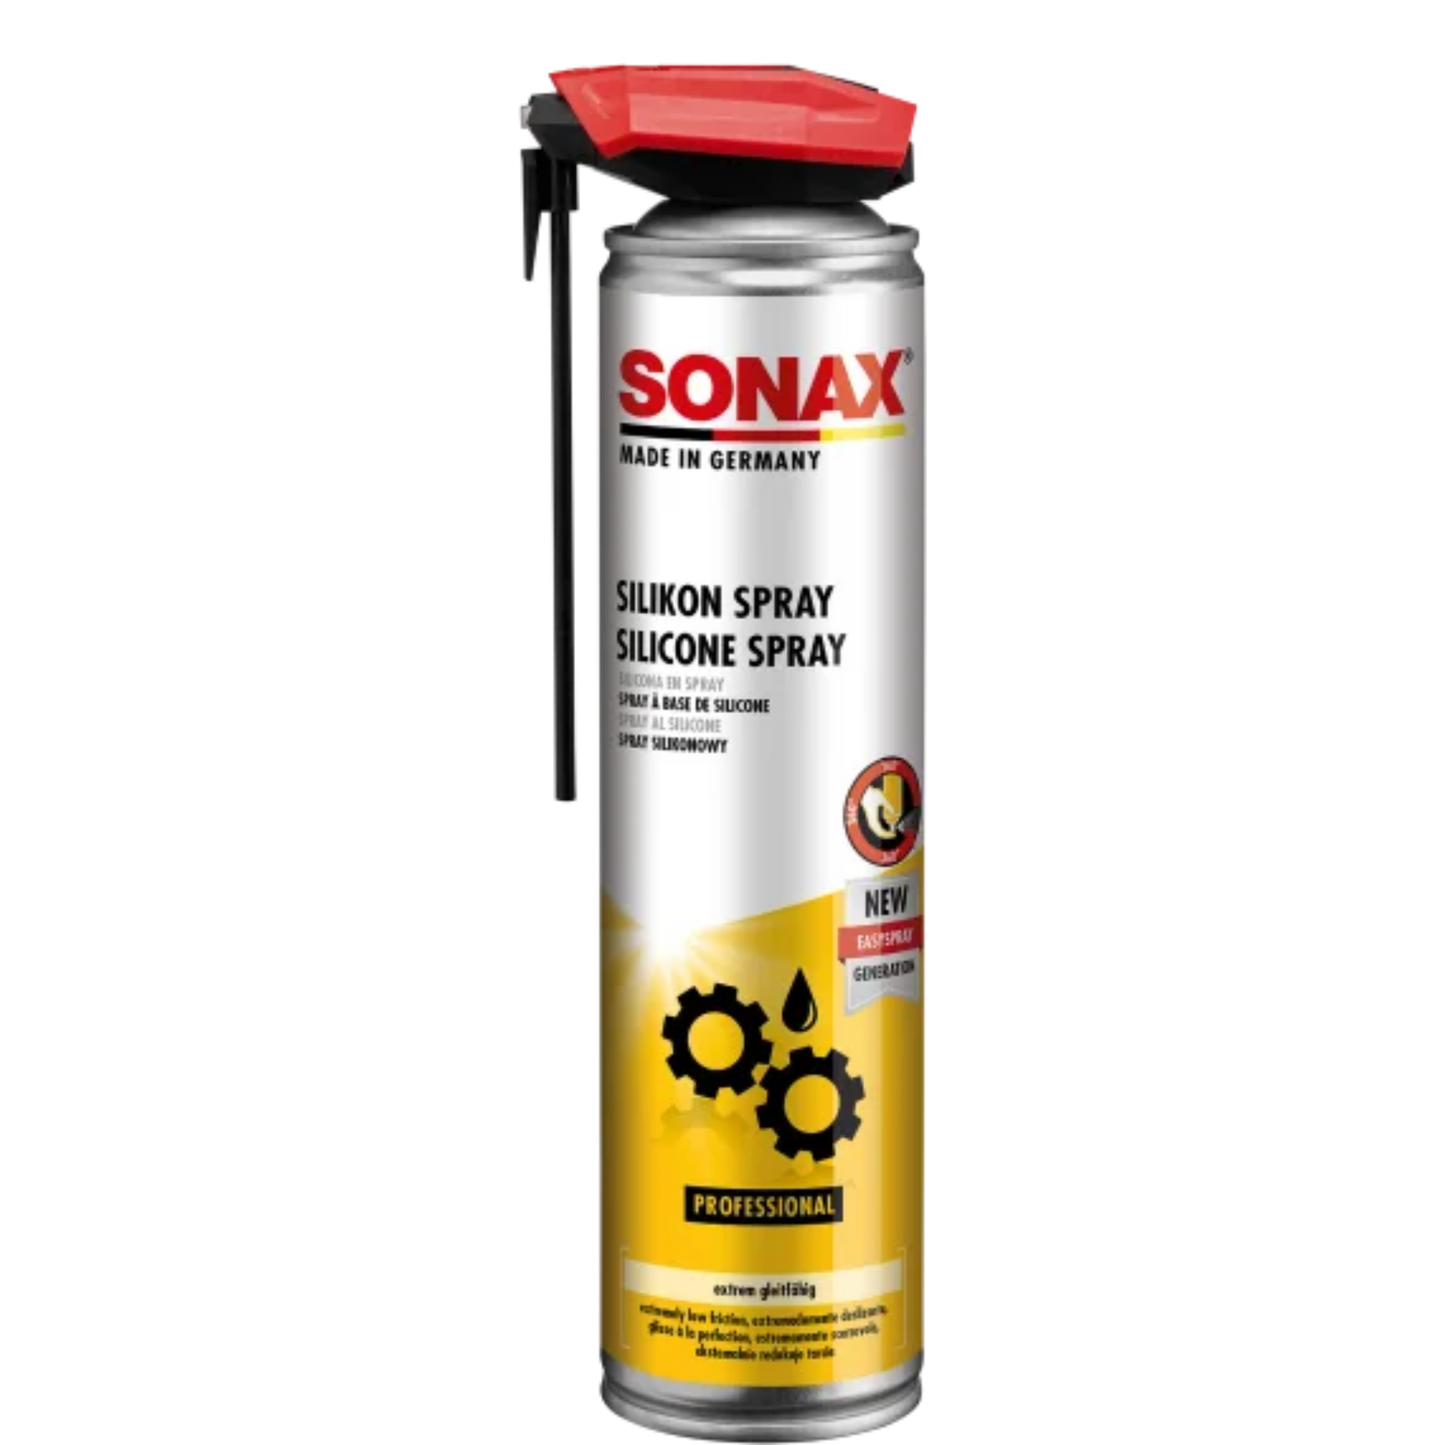 SONAX silicone spray with EasySpray, 400ml